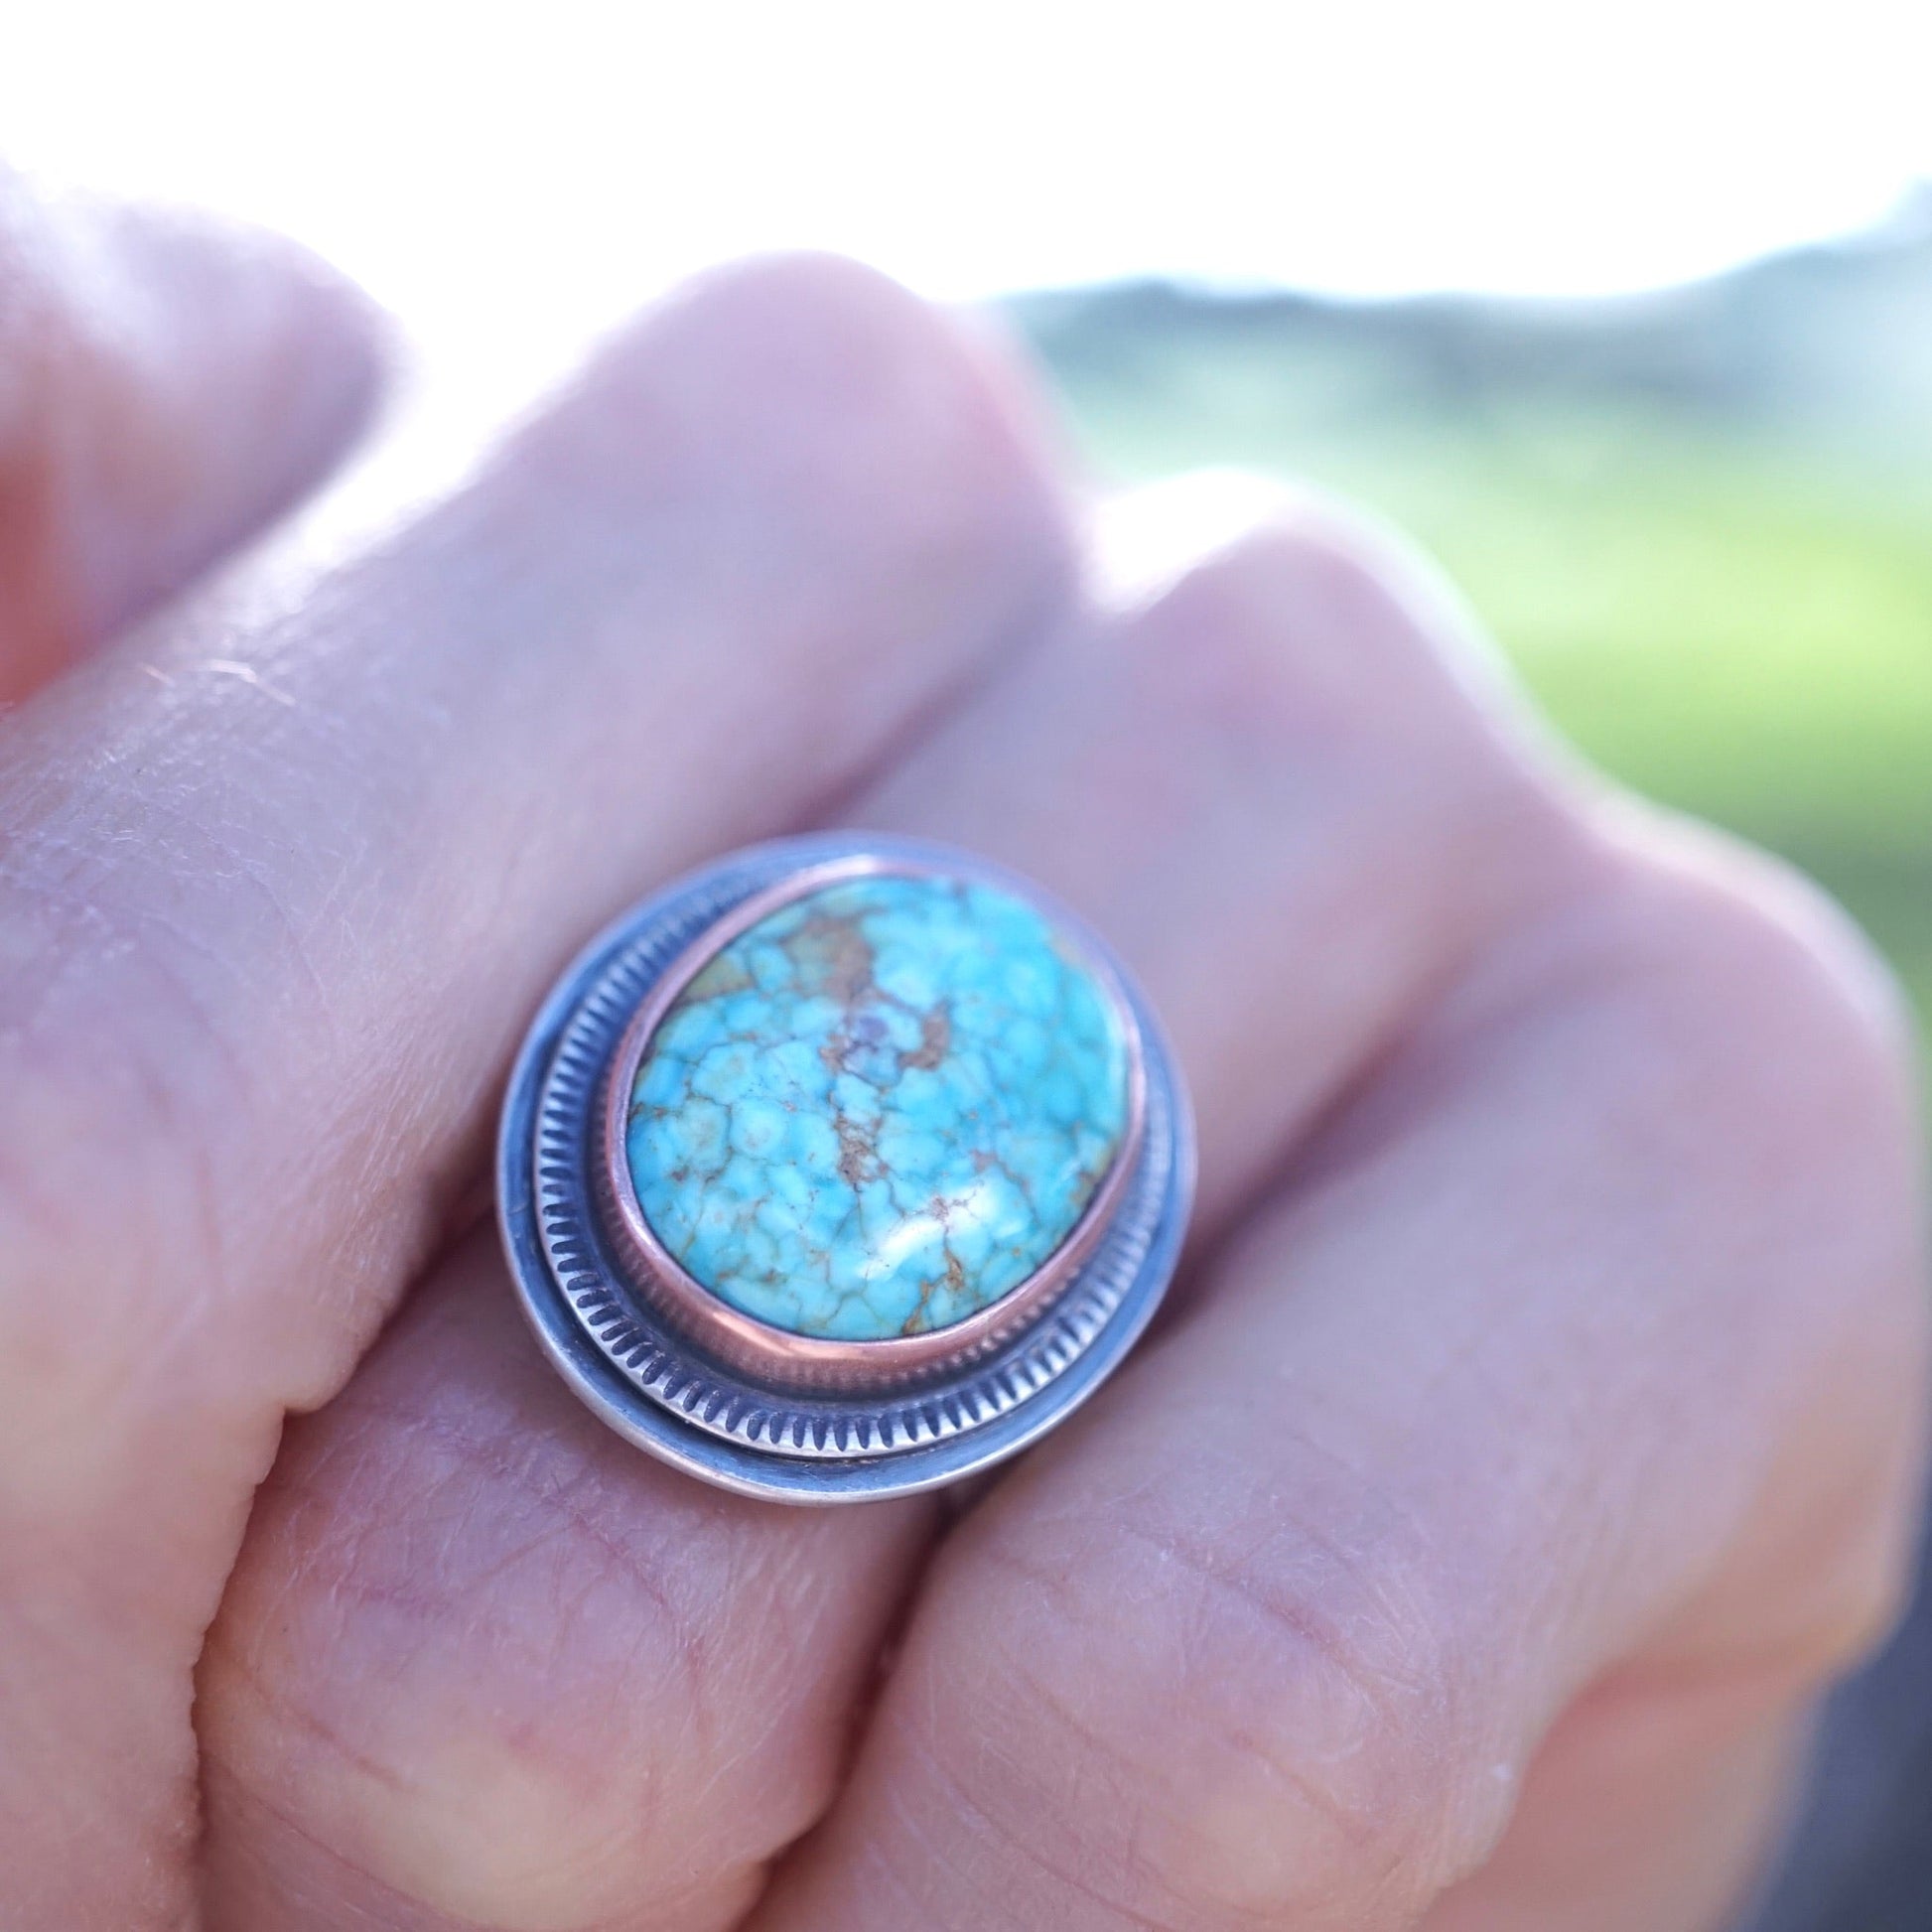 polychrome kingman turquoise ring with copper bezel - size 5.25/5.5 - Lumenrose